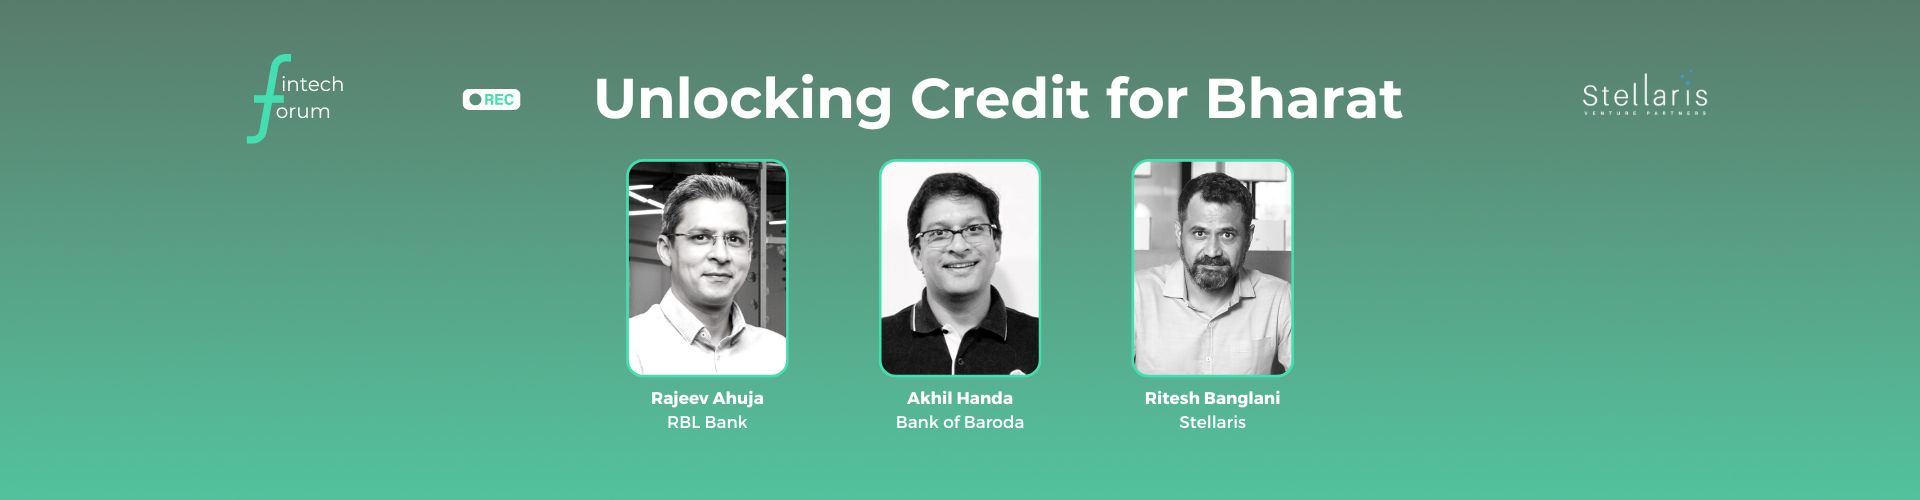 Fintech Forum #5: Unlocking Credit for Bharat